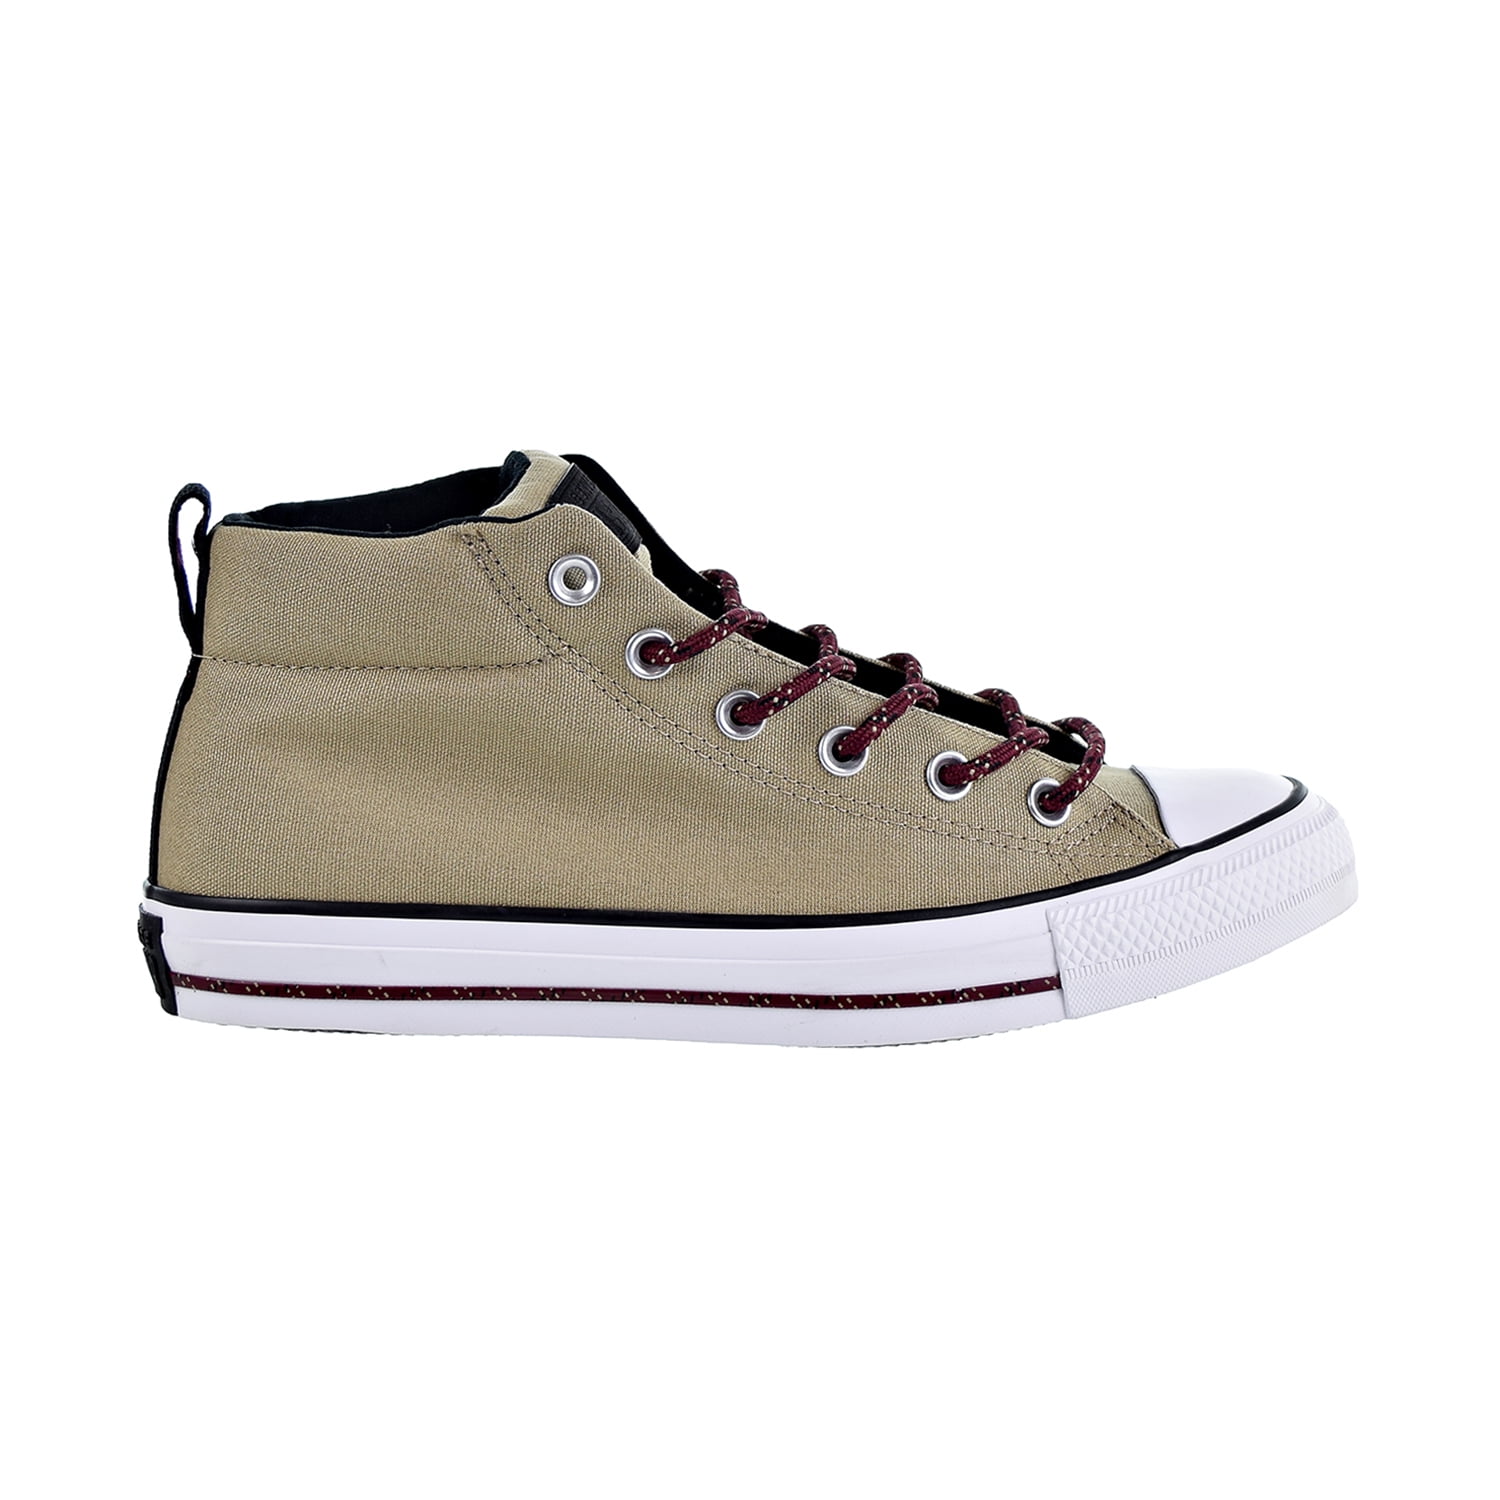 Converse Chuck Taylor All Star Street Mid Unisex Shoes Khaki-Black-White 162383f